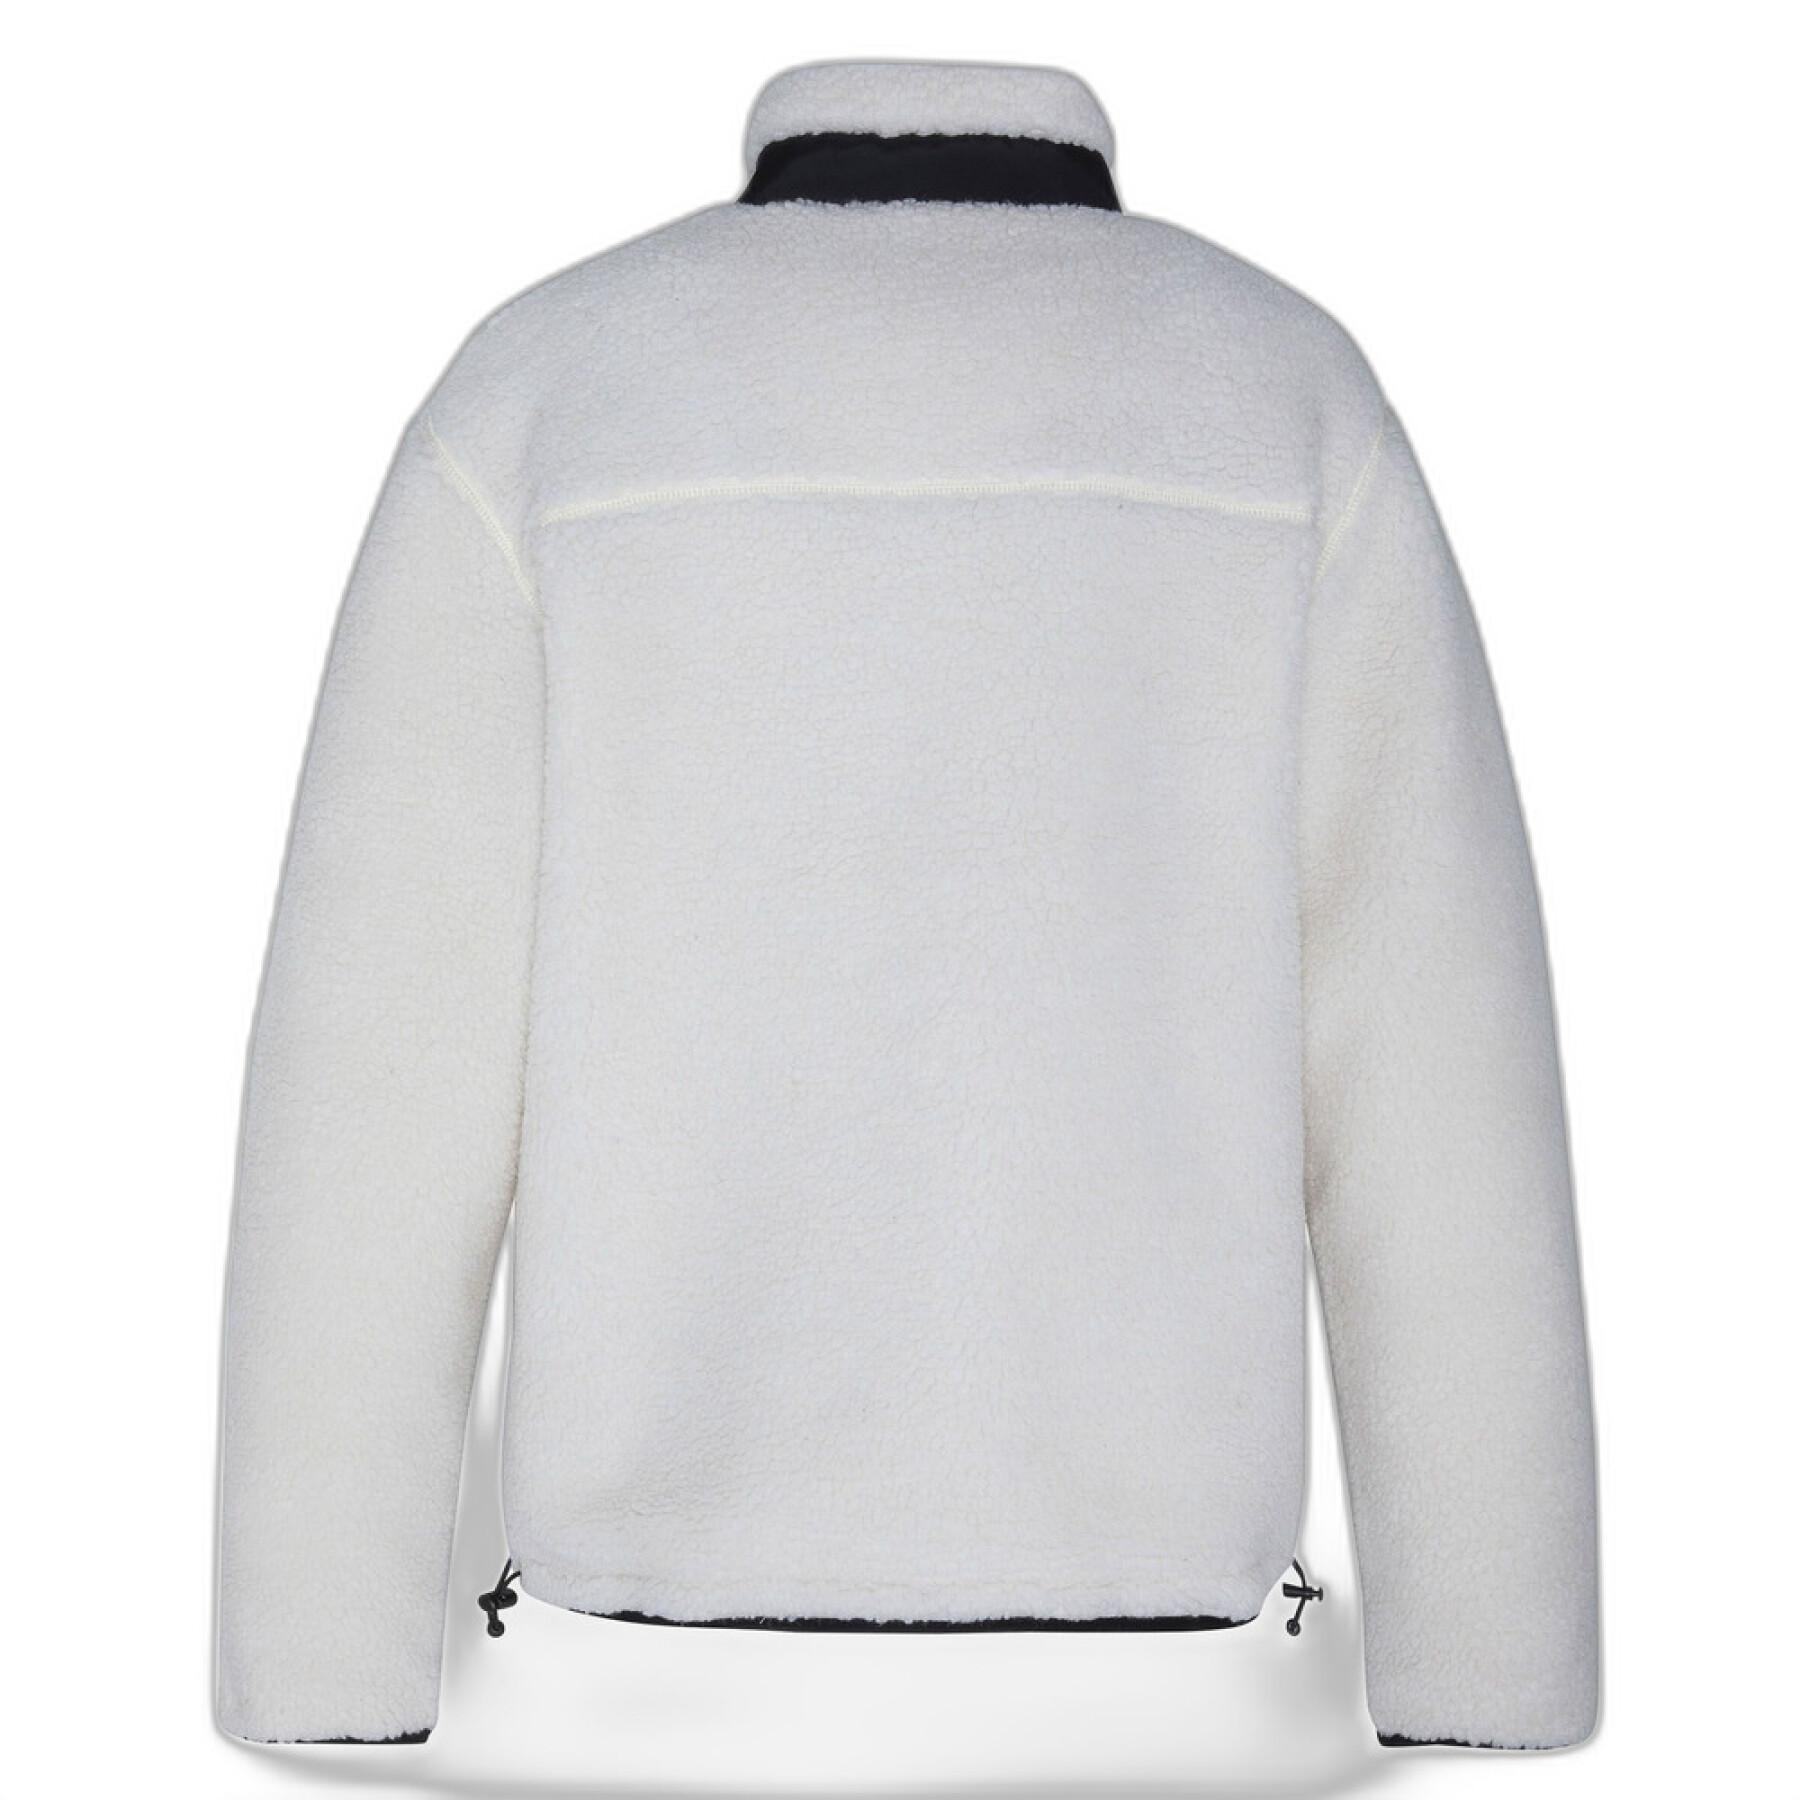 Zipped sweatshirt with pockets Schott